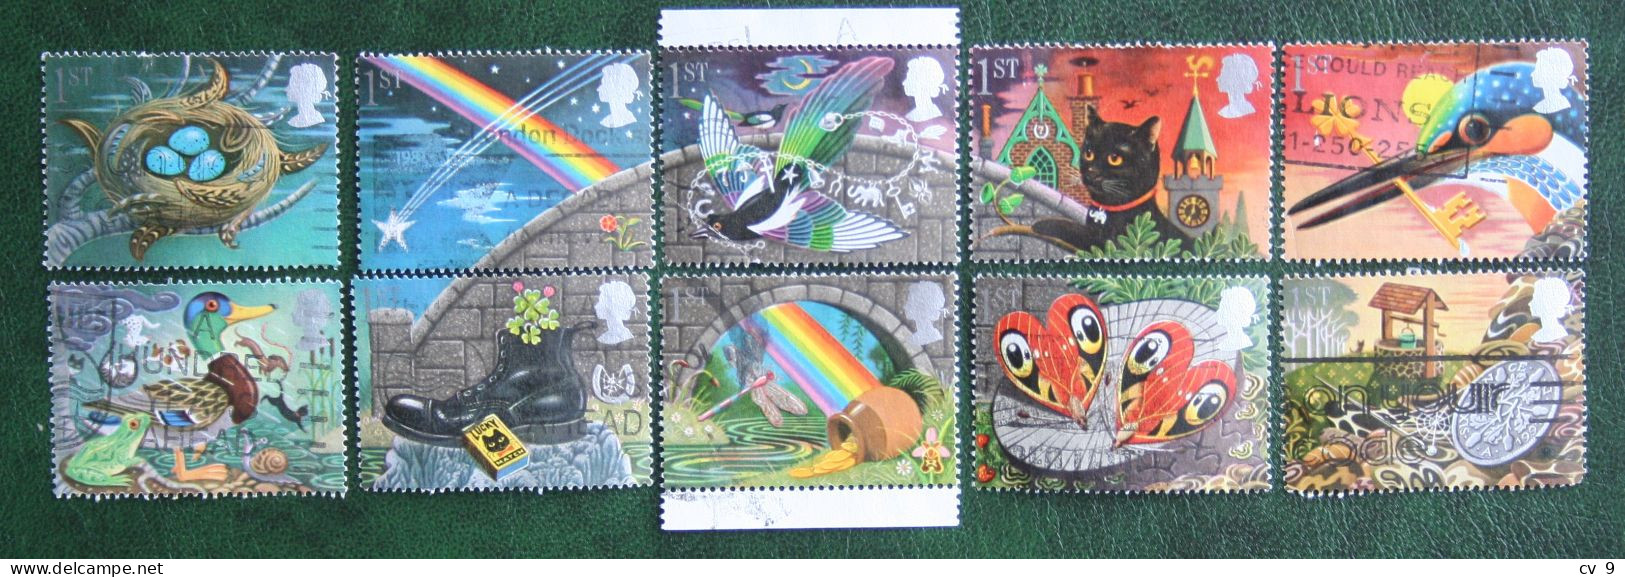 Grussmarken Greetings Bird Rainbow Mi 1310-1319 1991 Used Gebruikt Oblitere ENGLAND GRANDE-BRETAGNE GB GREAT BRITAIN - Used Stamps